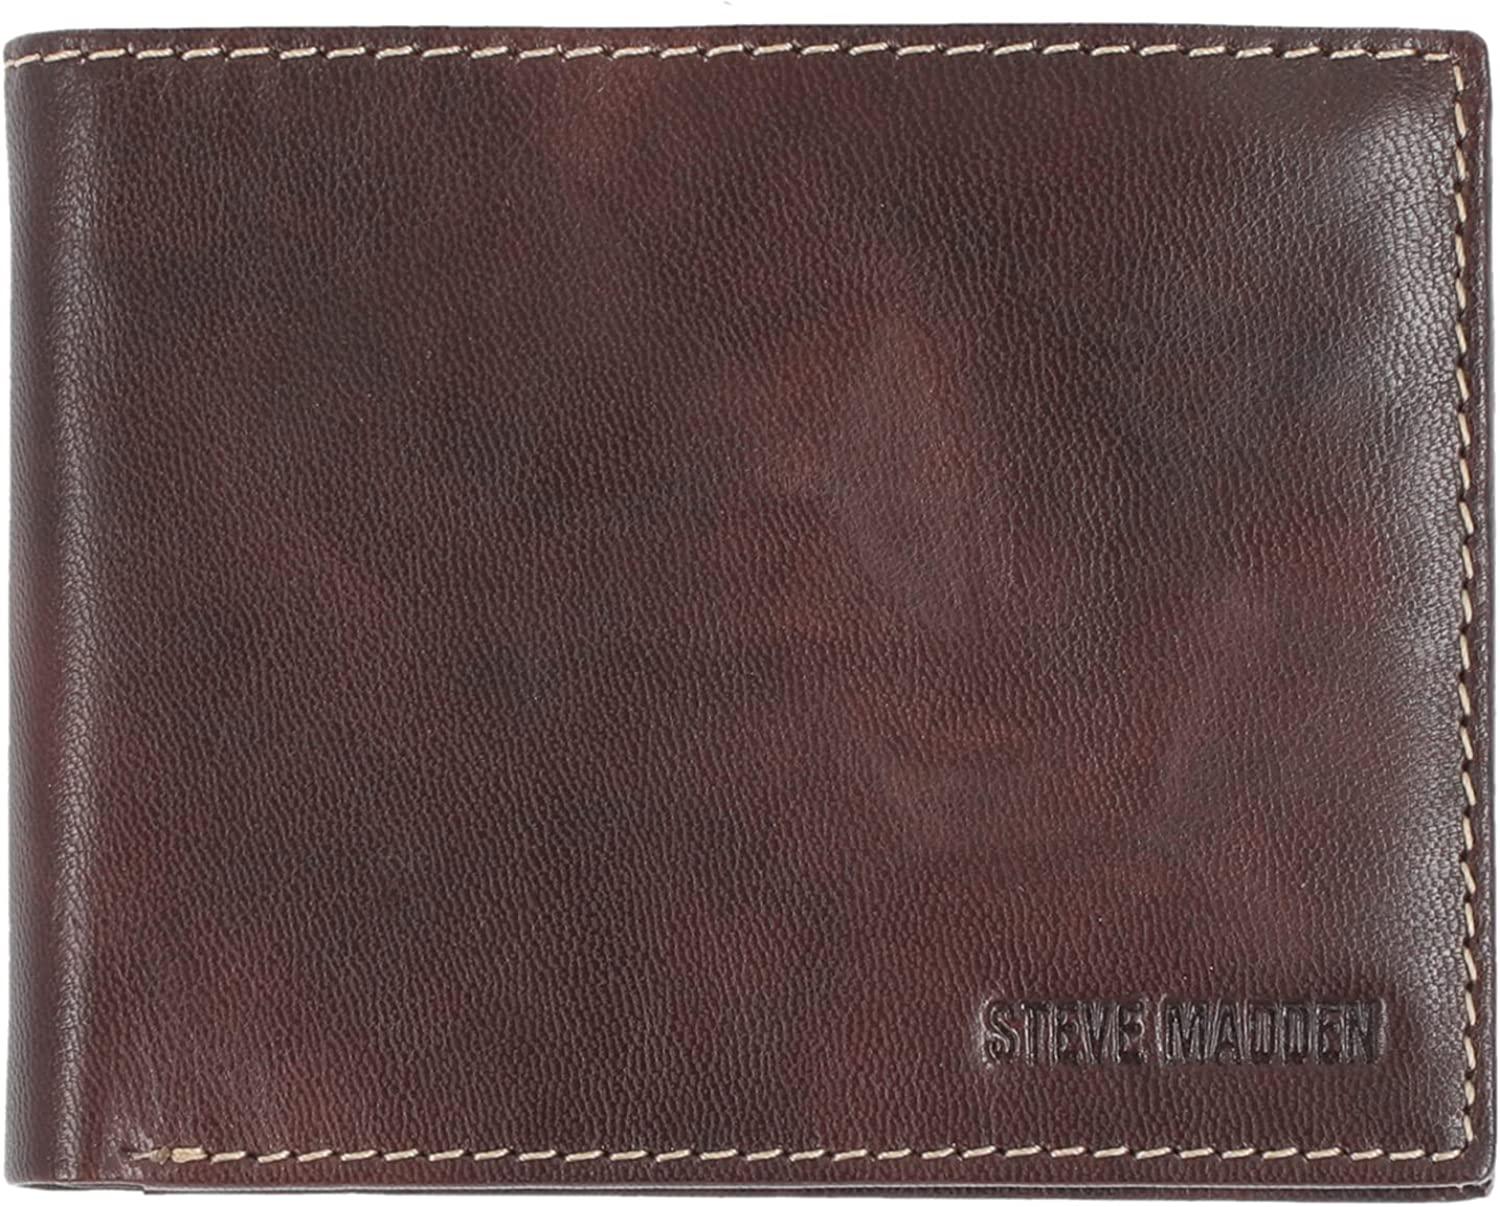 Steve Madden Leather RFID Wallet for $7.45